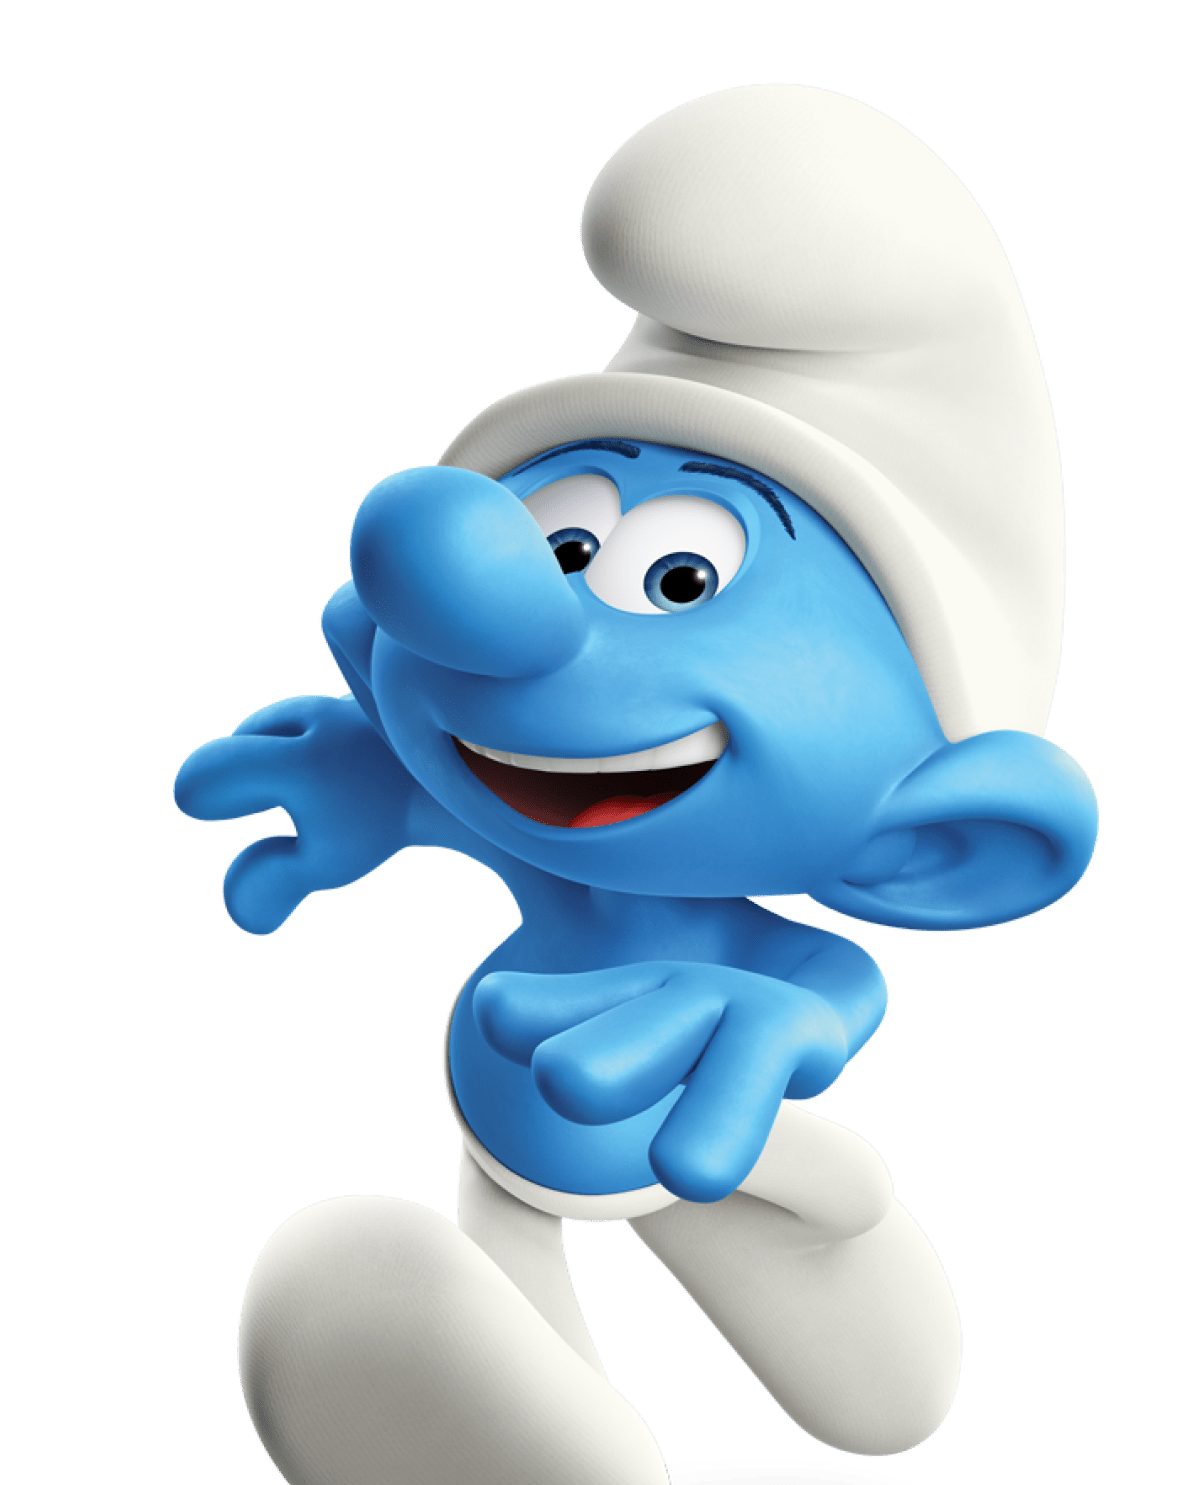 Smurfs (race), Smurfs Wiki